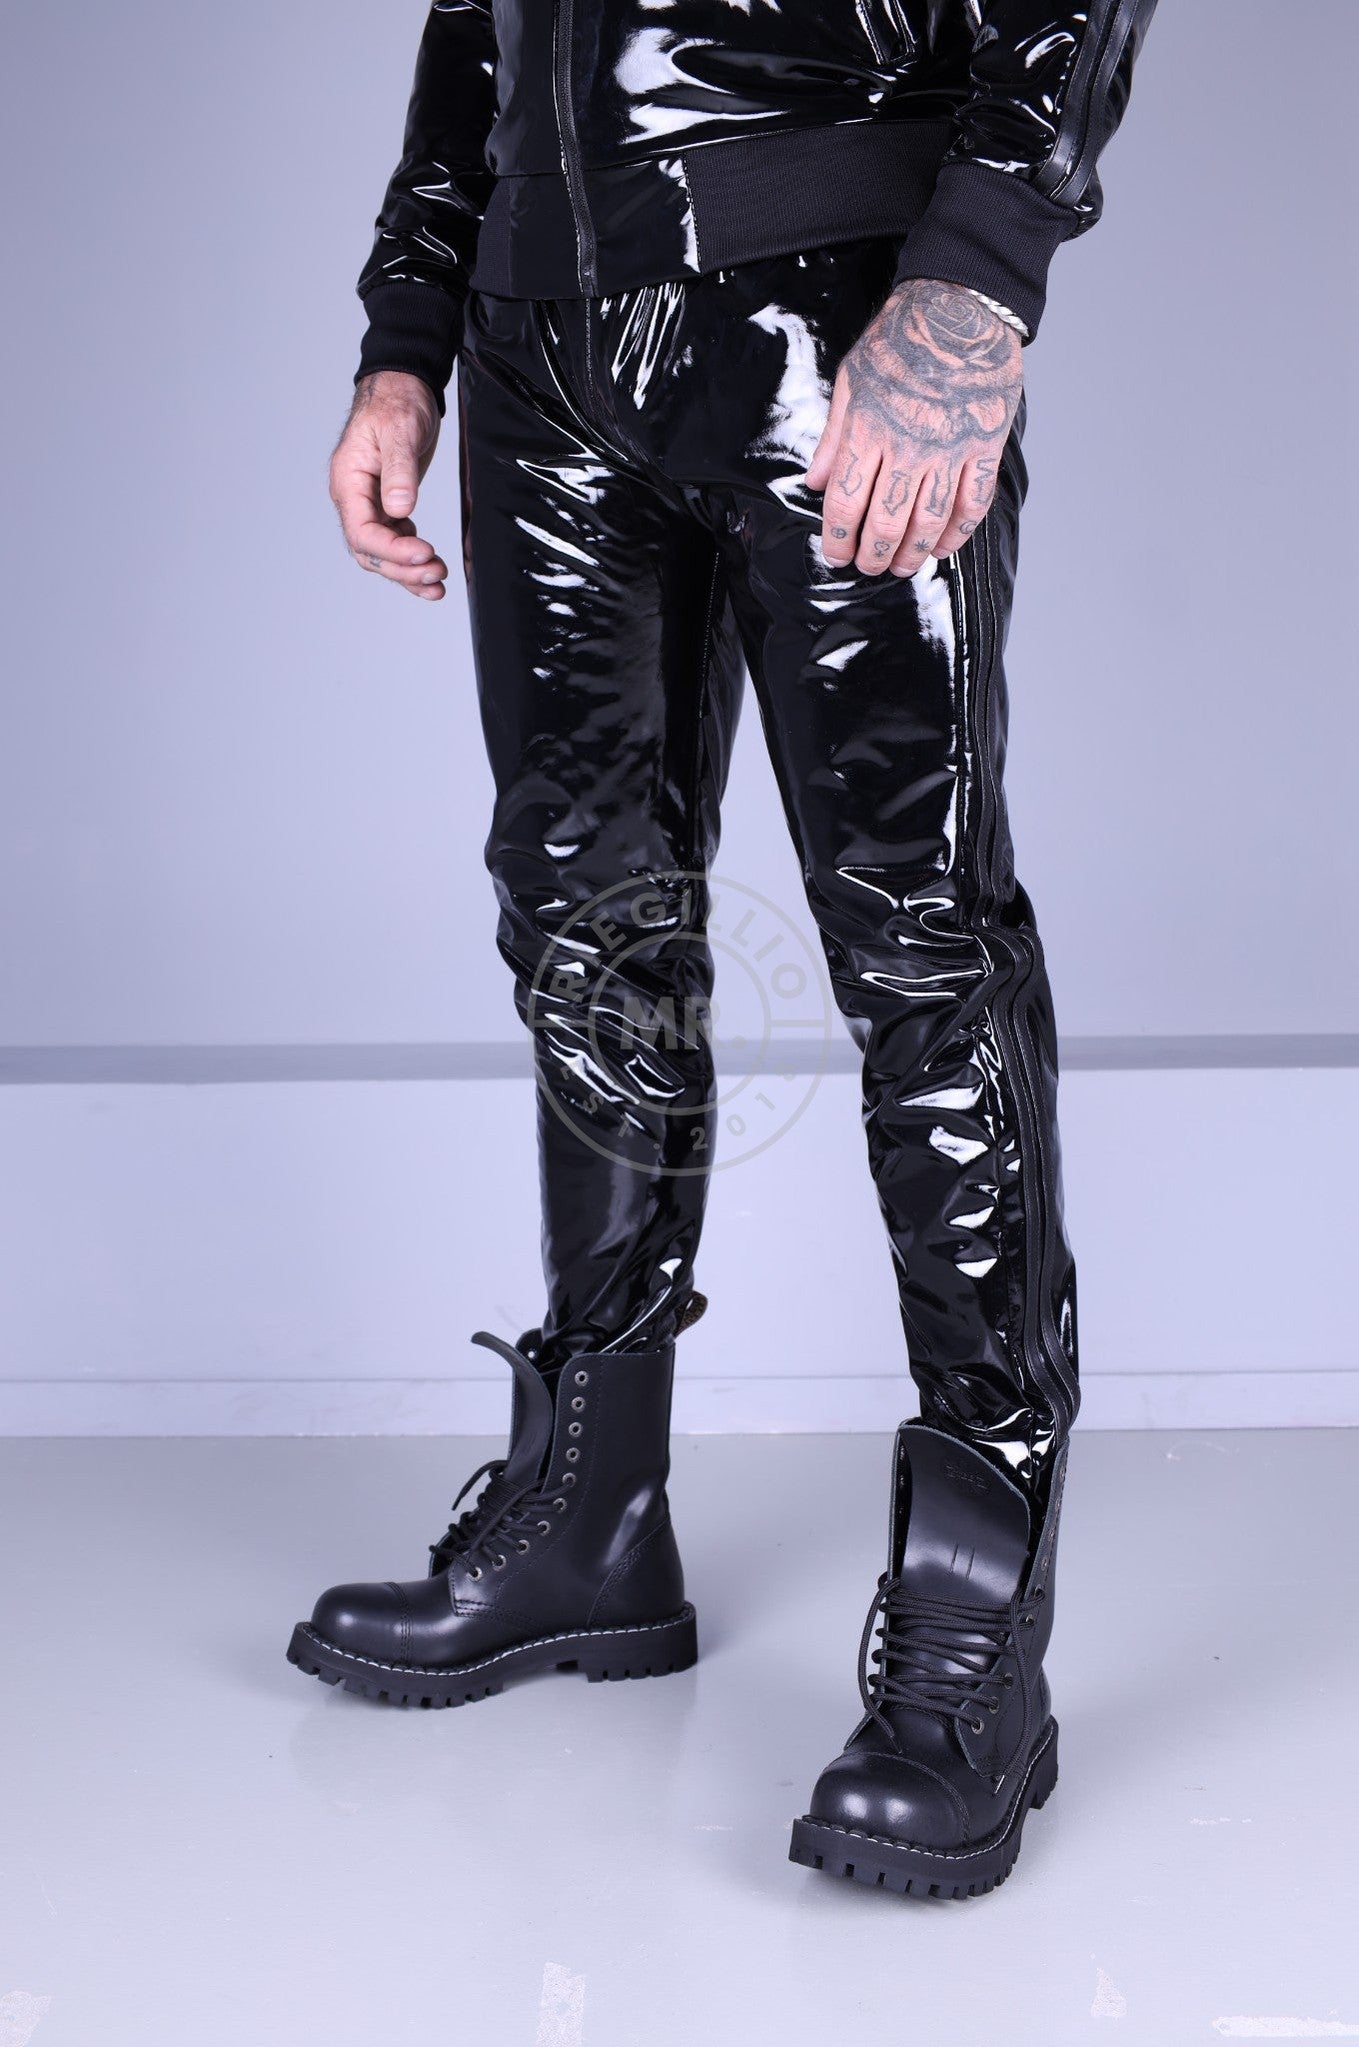 Full Black PVC Tracksuit Pants by MR. Riegillio